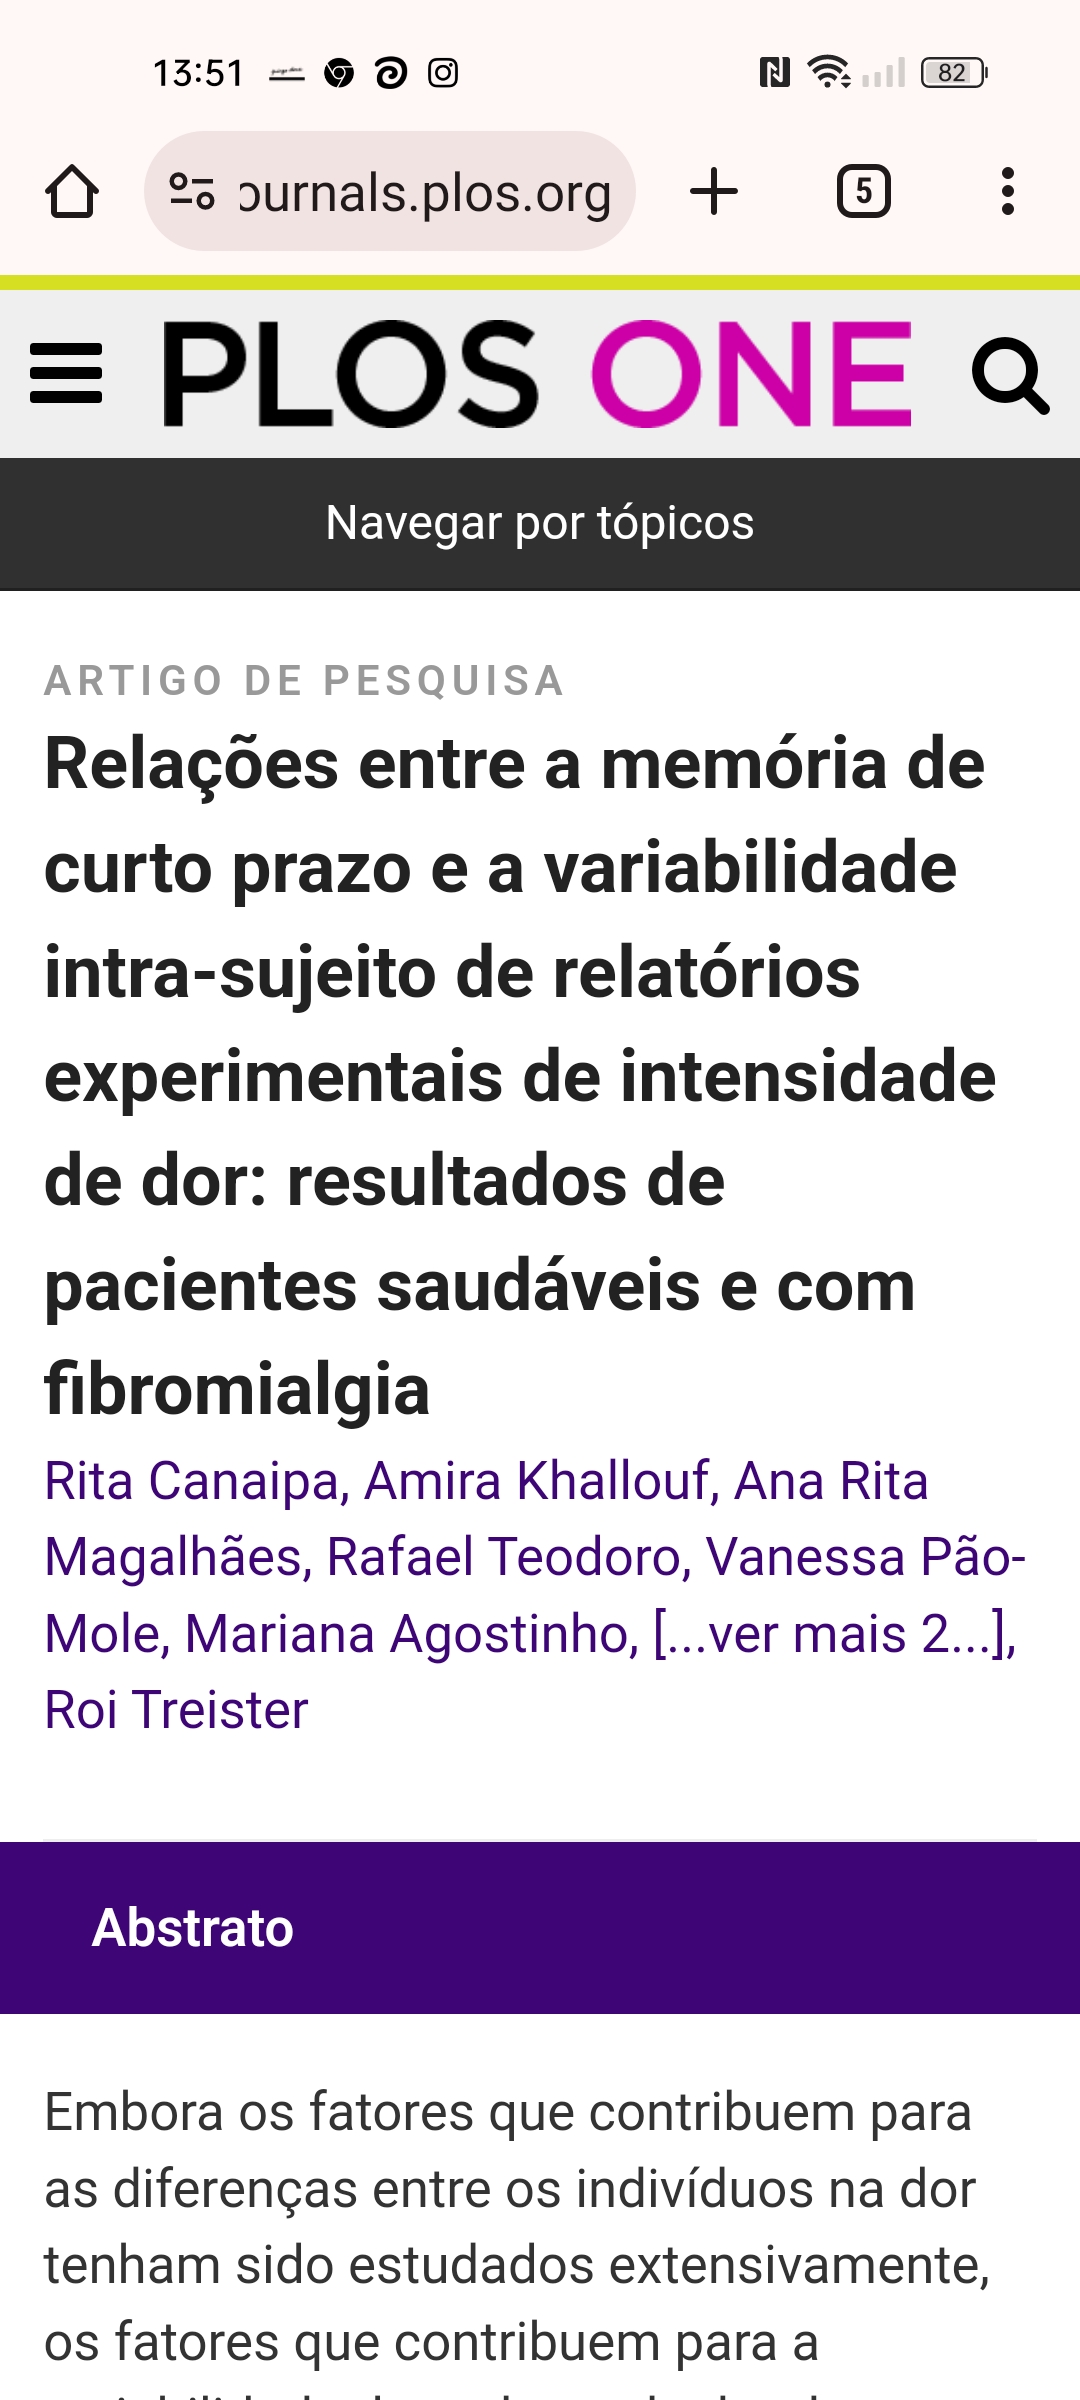 Dra. Ana Rita Magalhães - Lisboa - Sessão de Psicoterapia